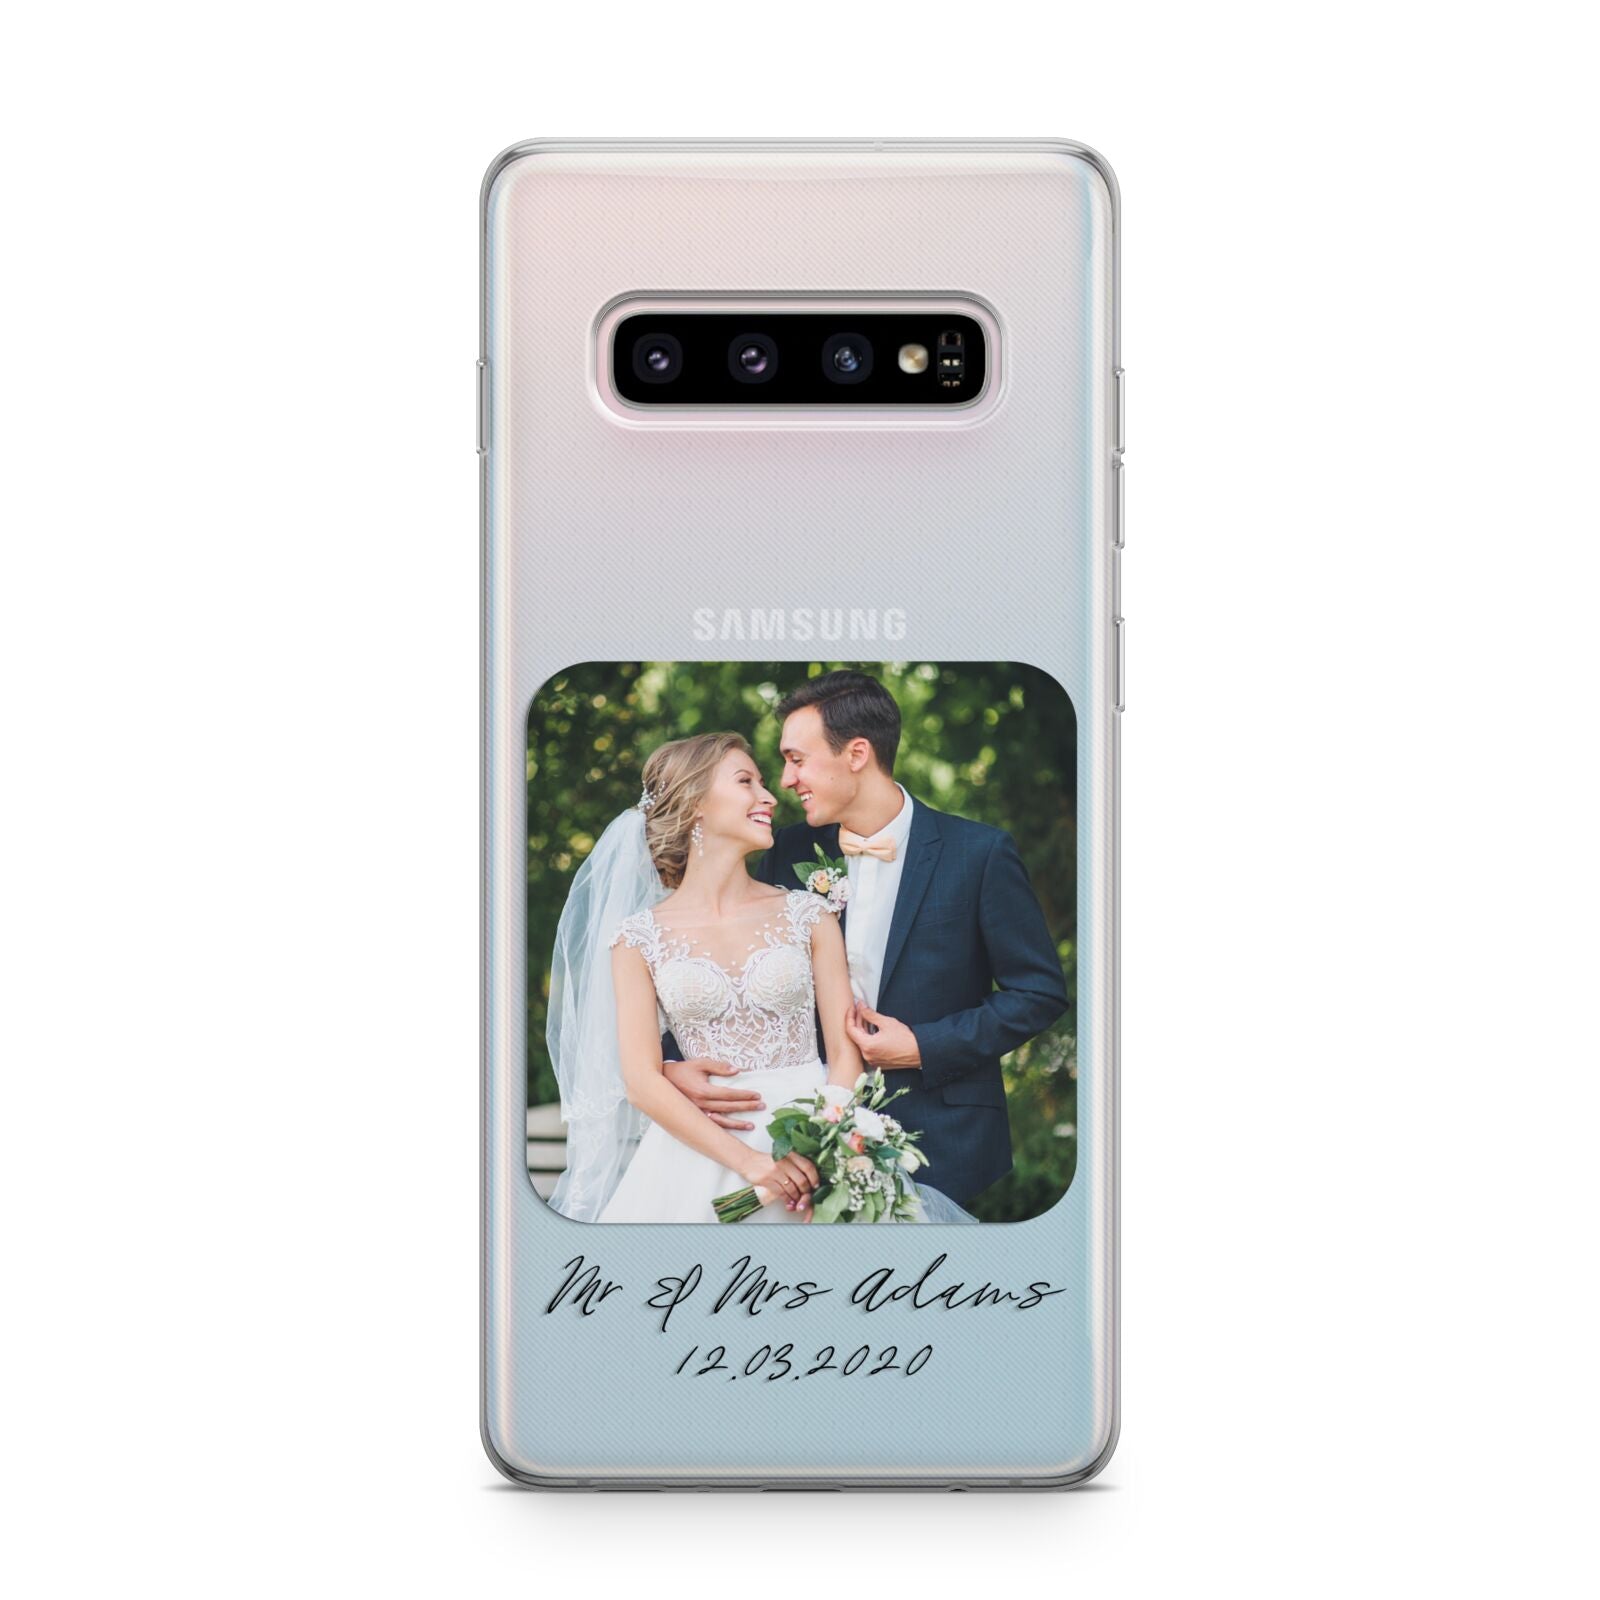 Wedding Photo Upload Keepsake with Text Samsung Galaxy S10 Plus Case